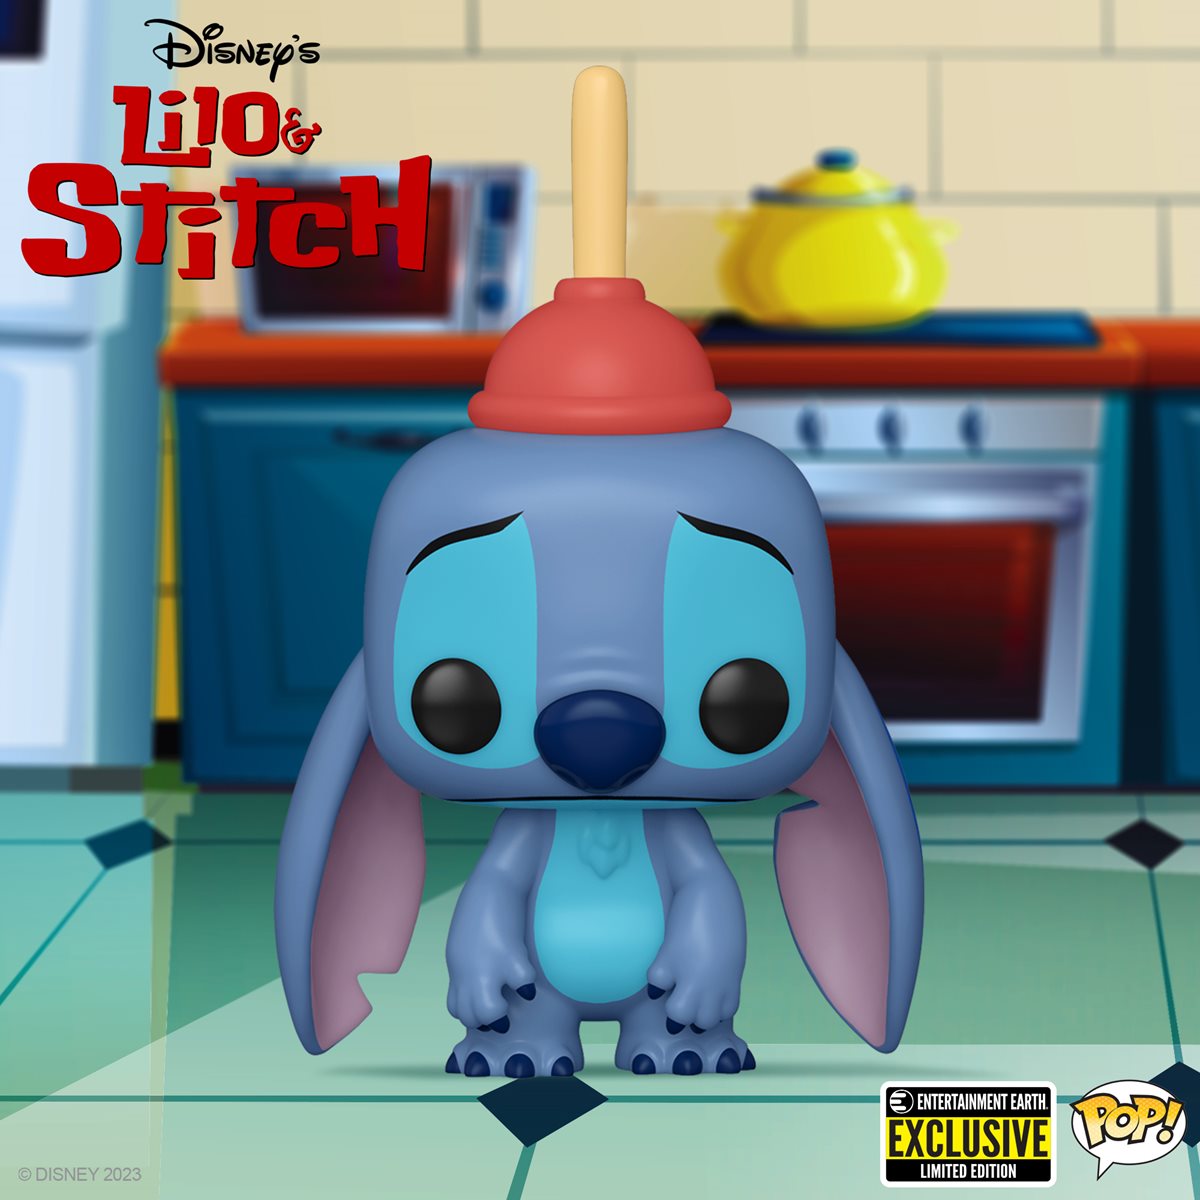 Funko Pop! Disney Series 1: Stitch Vinyl Figure (Bundled with Pop Box  Protector Case)